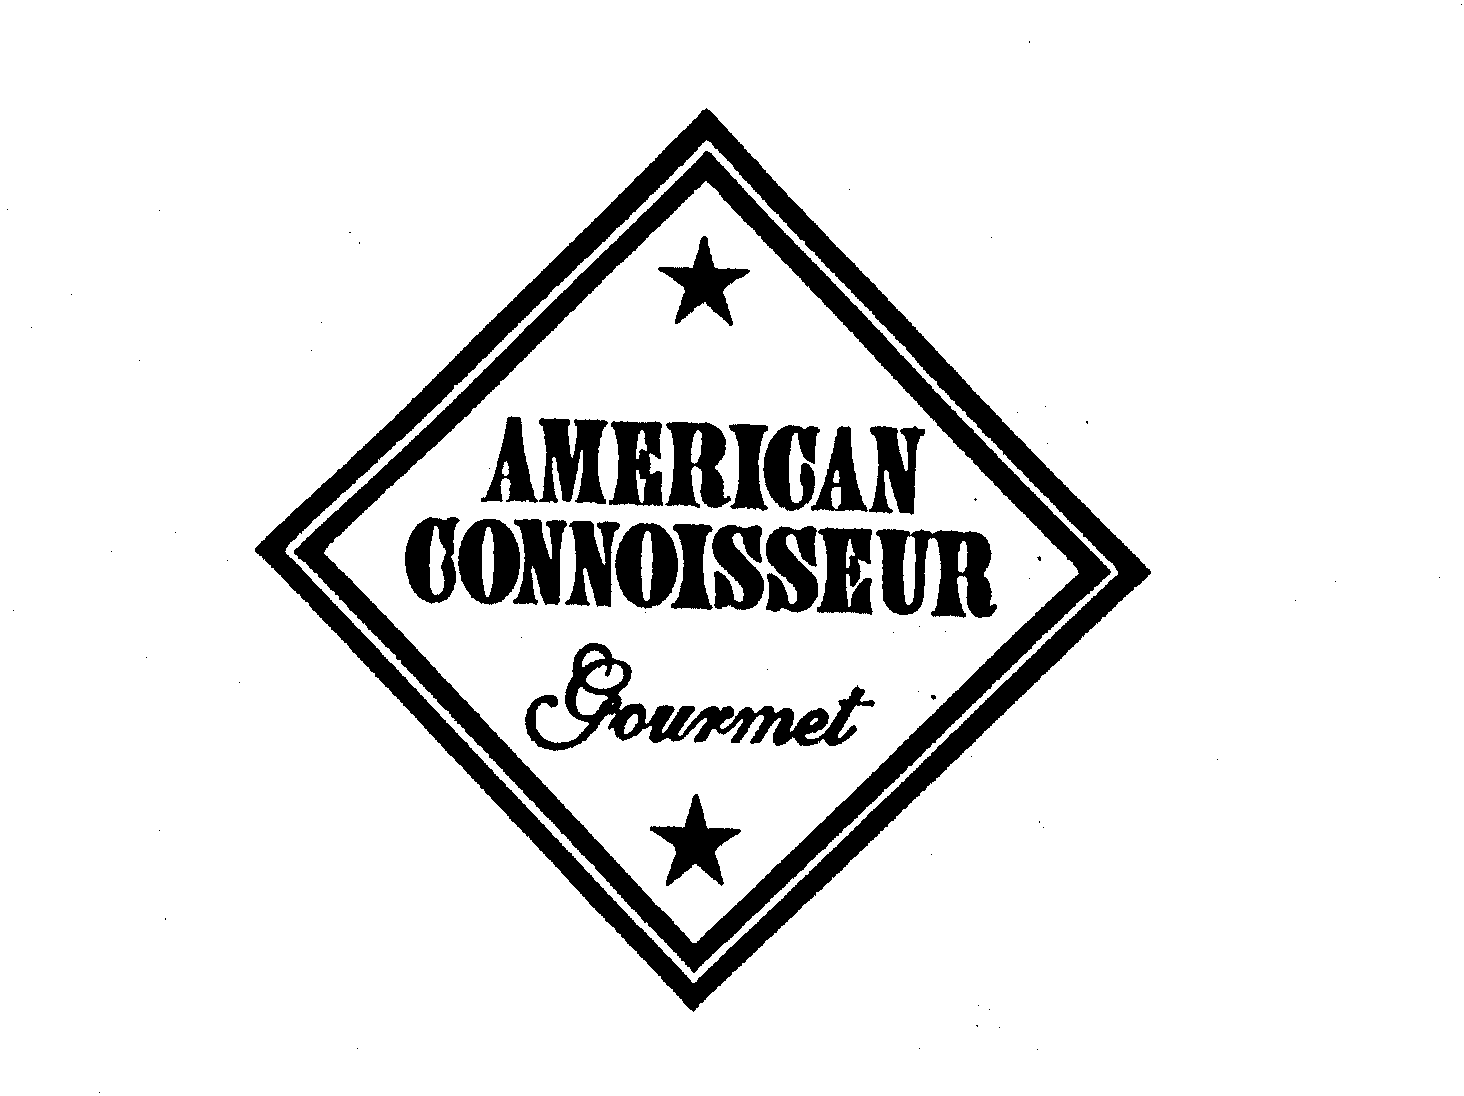  AMERICAN CONNOISSEUR GOURMET